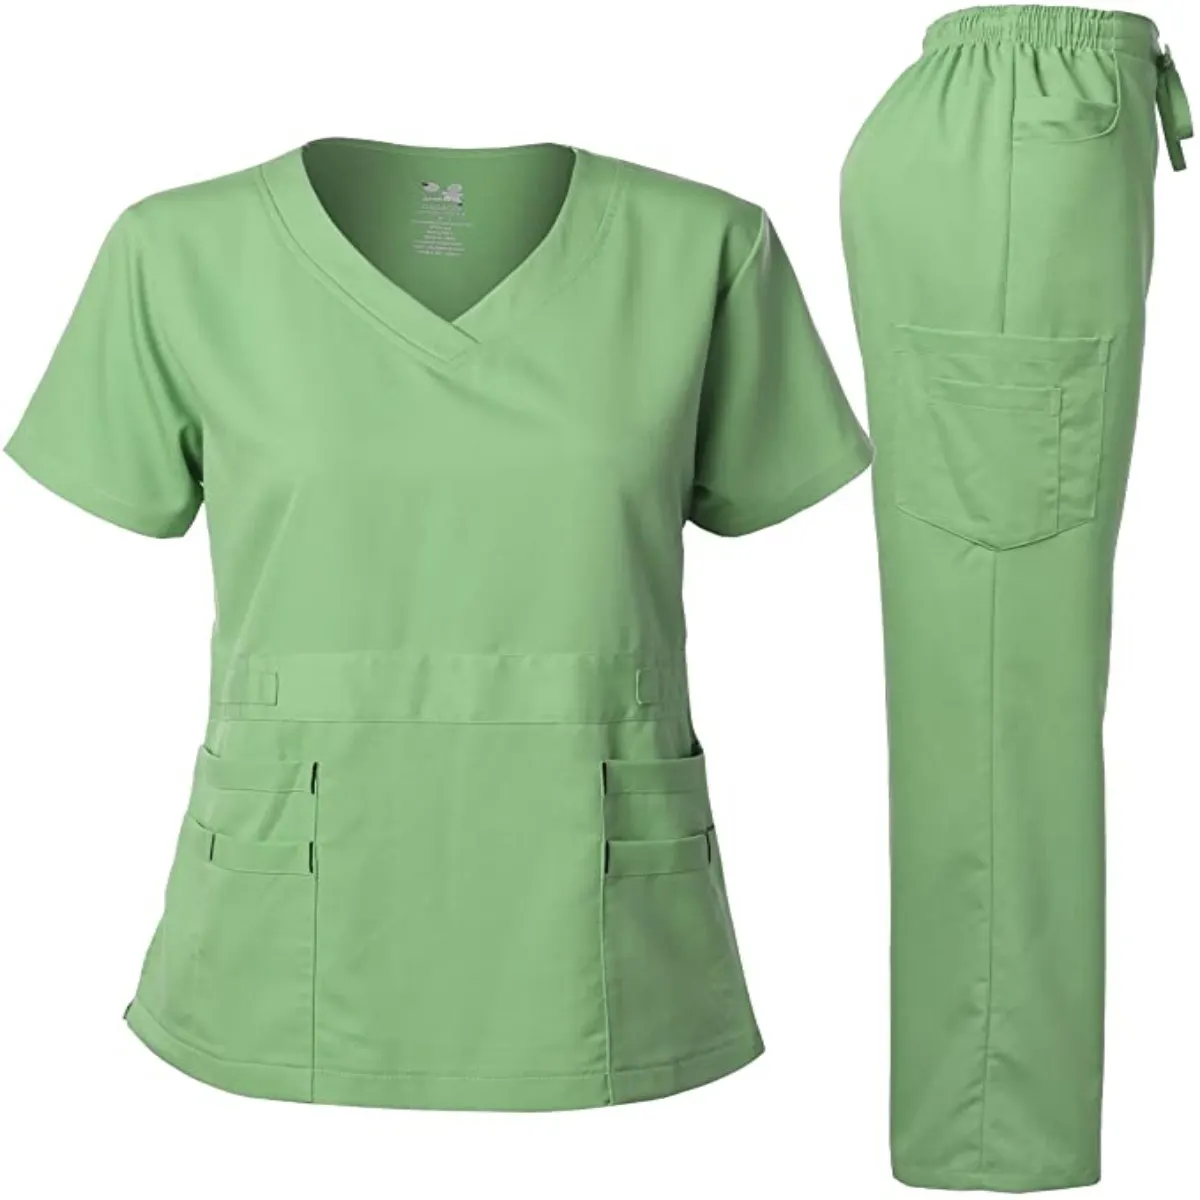 Nurse Medical Uniforms For Hospital Polyester From Bangladesh